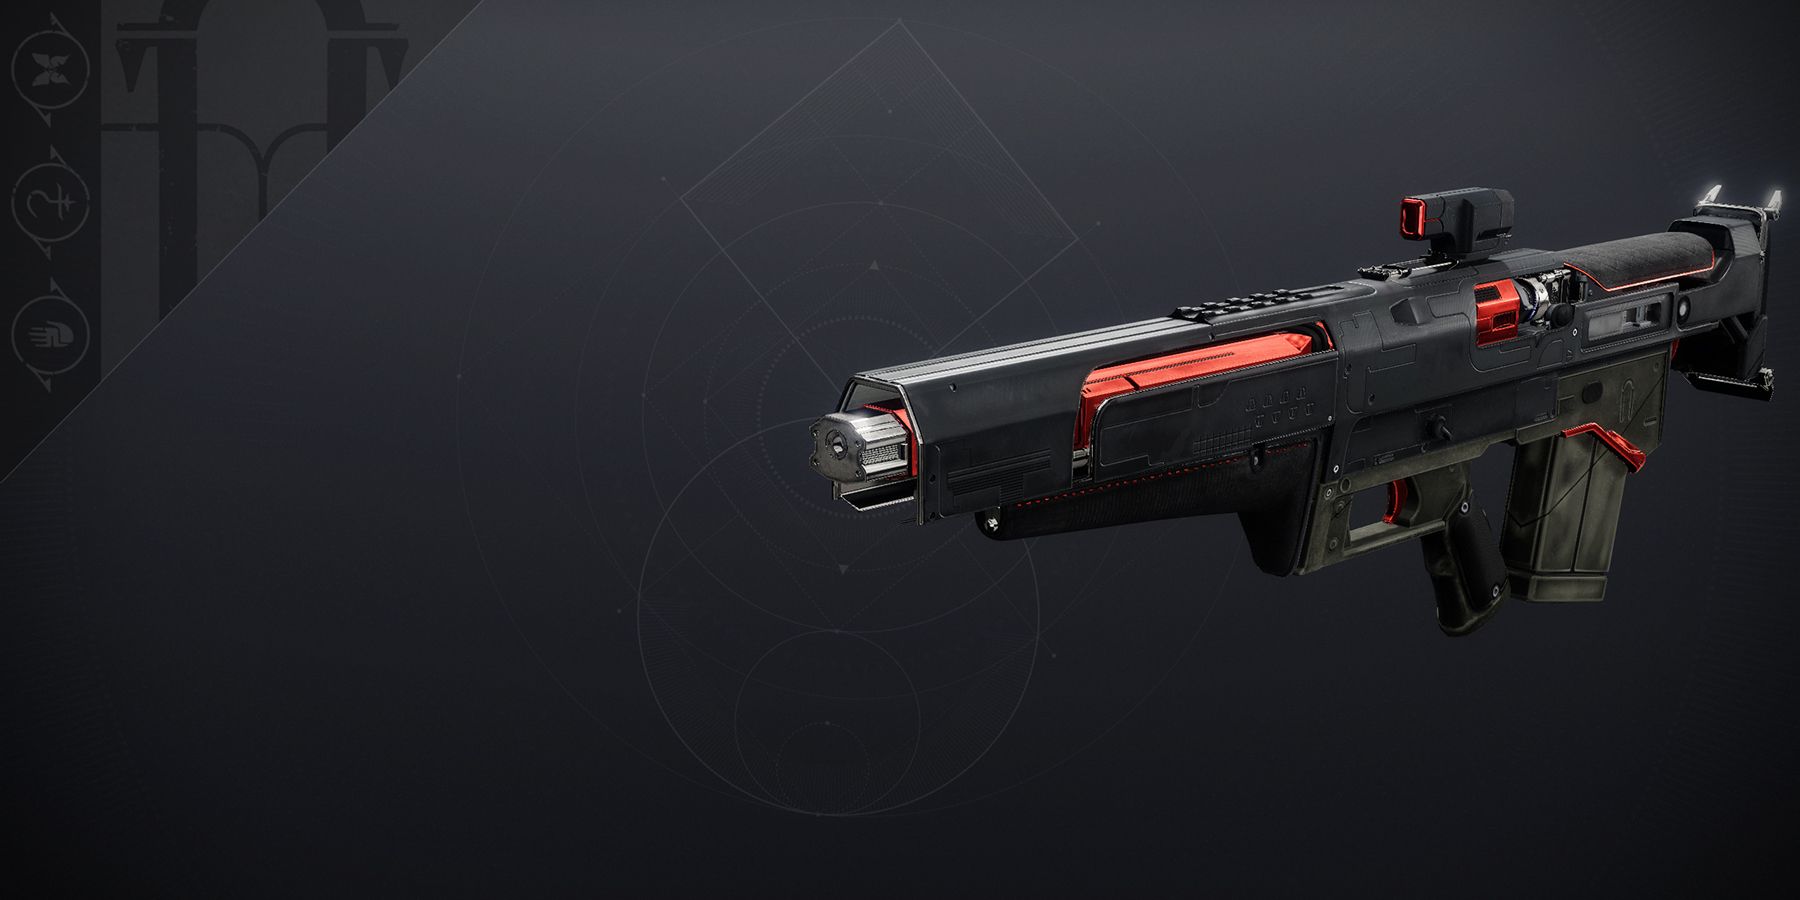 Blast Furnace pulse rifle from Destiny 2